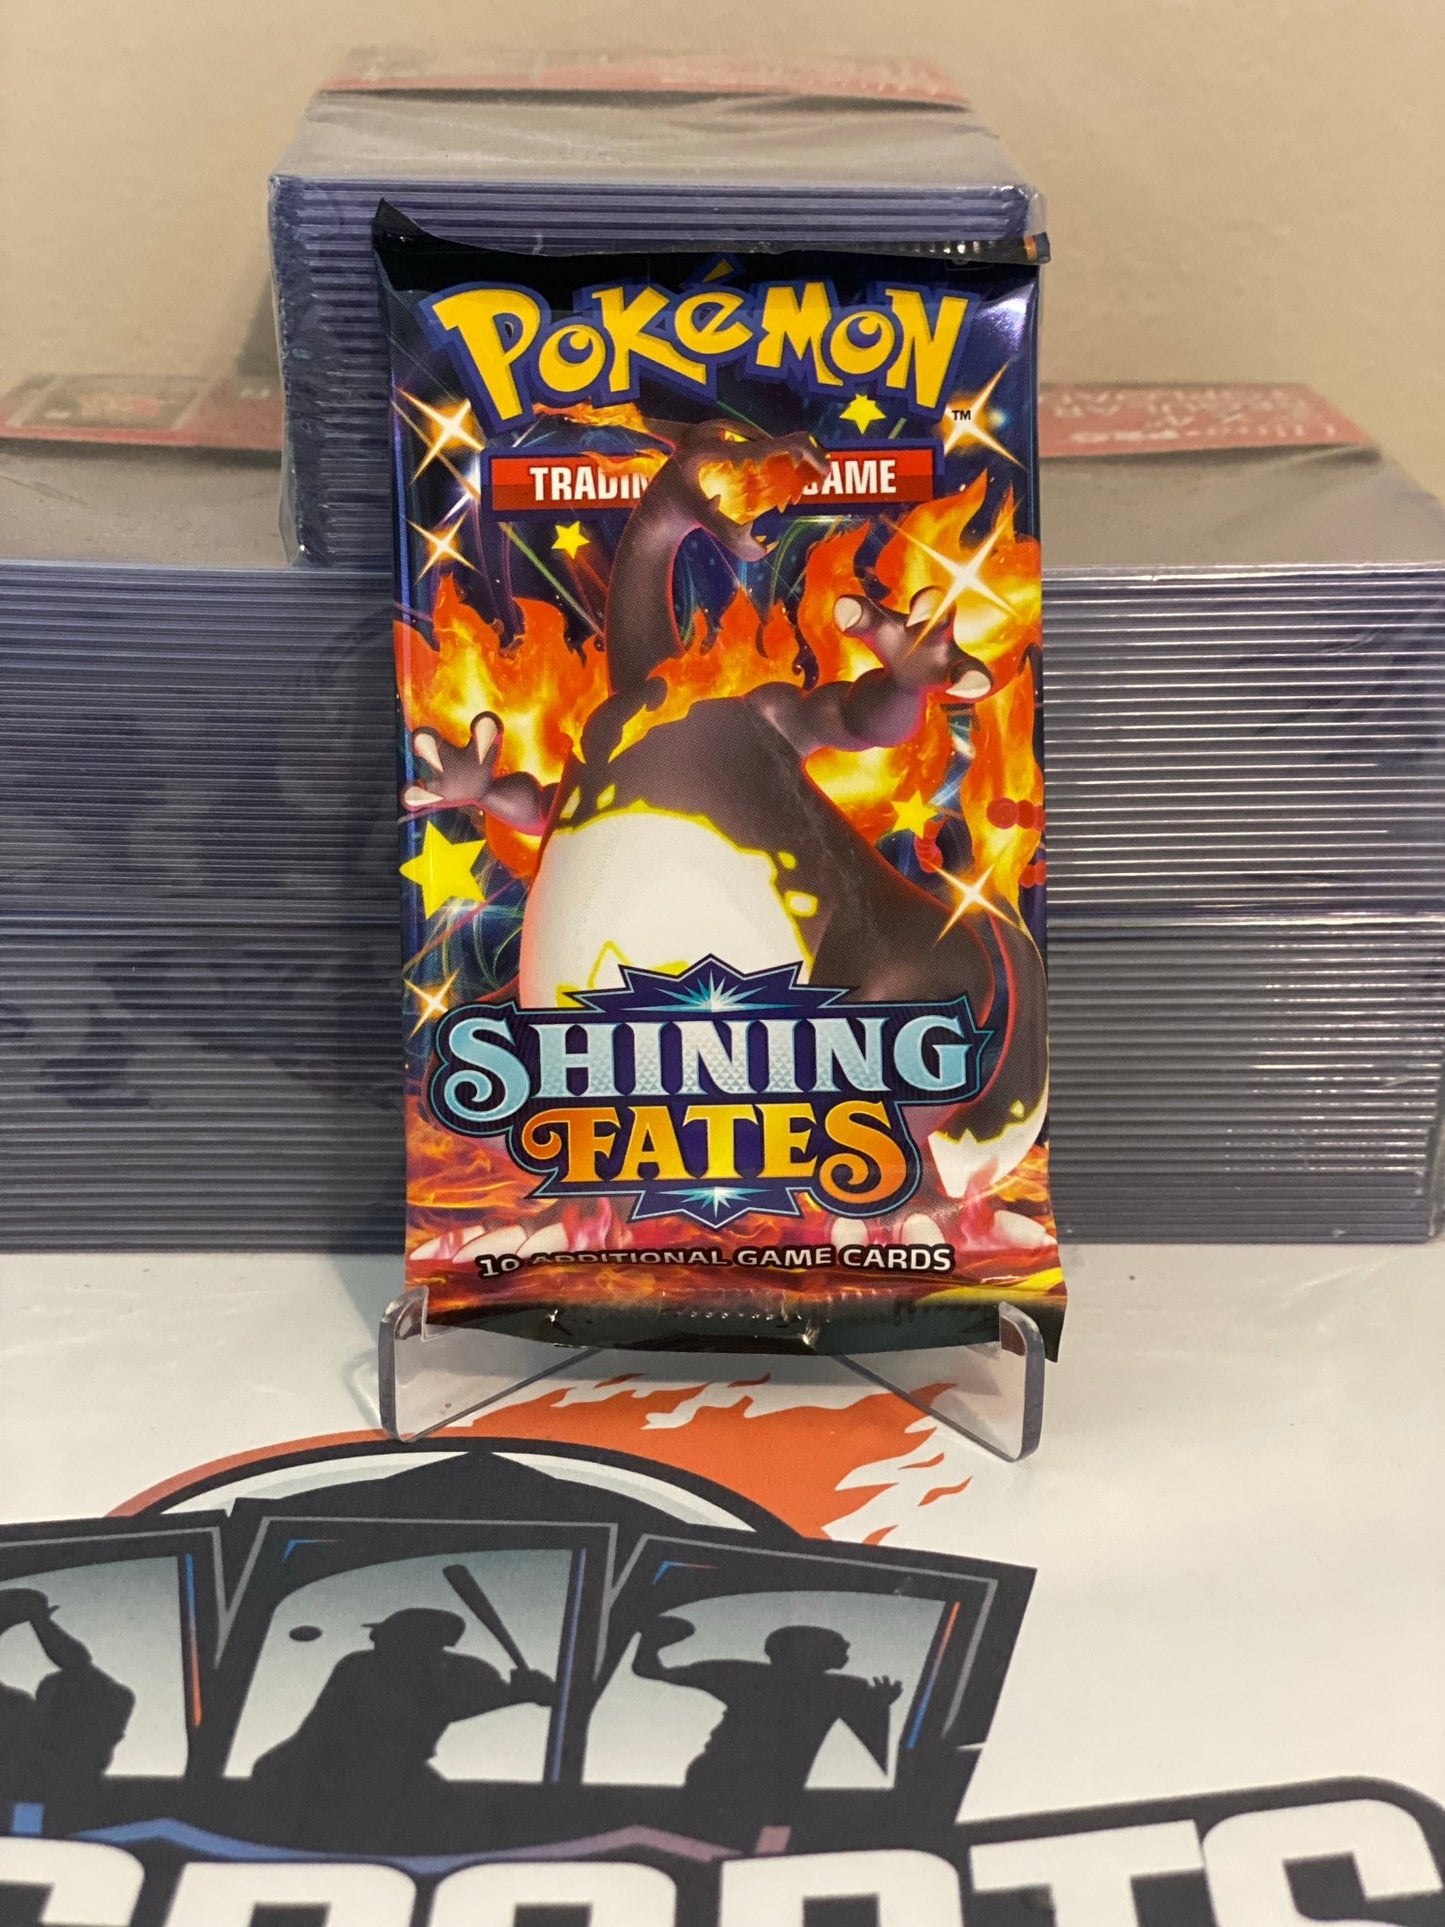 Pokémon TCG: Shining Fates Booster Pack